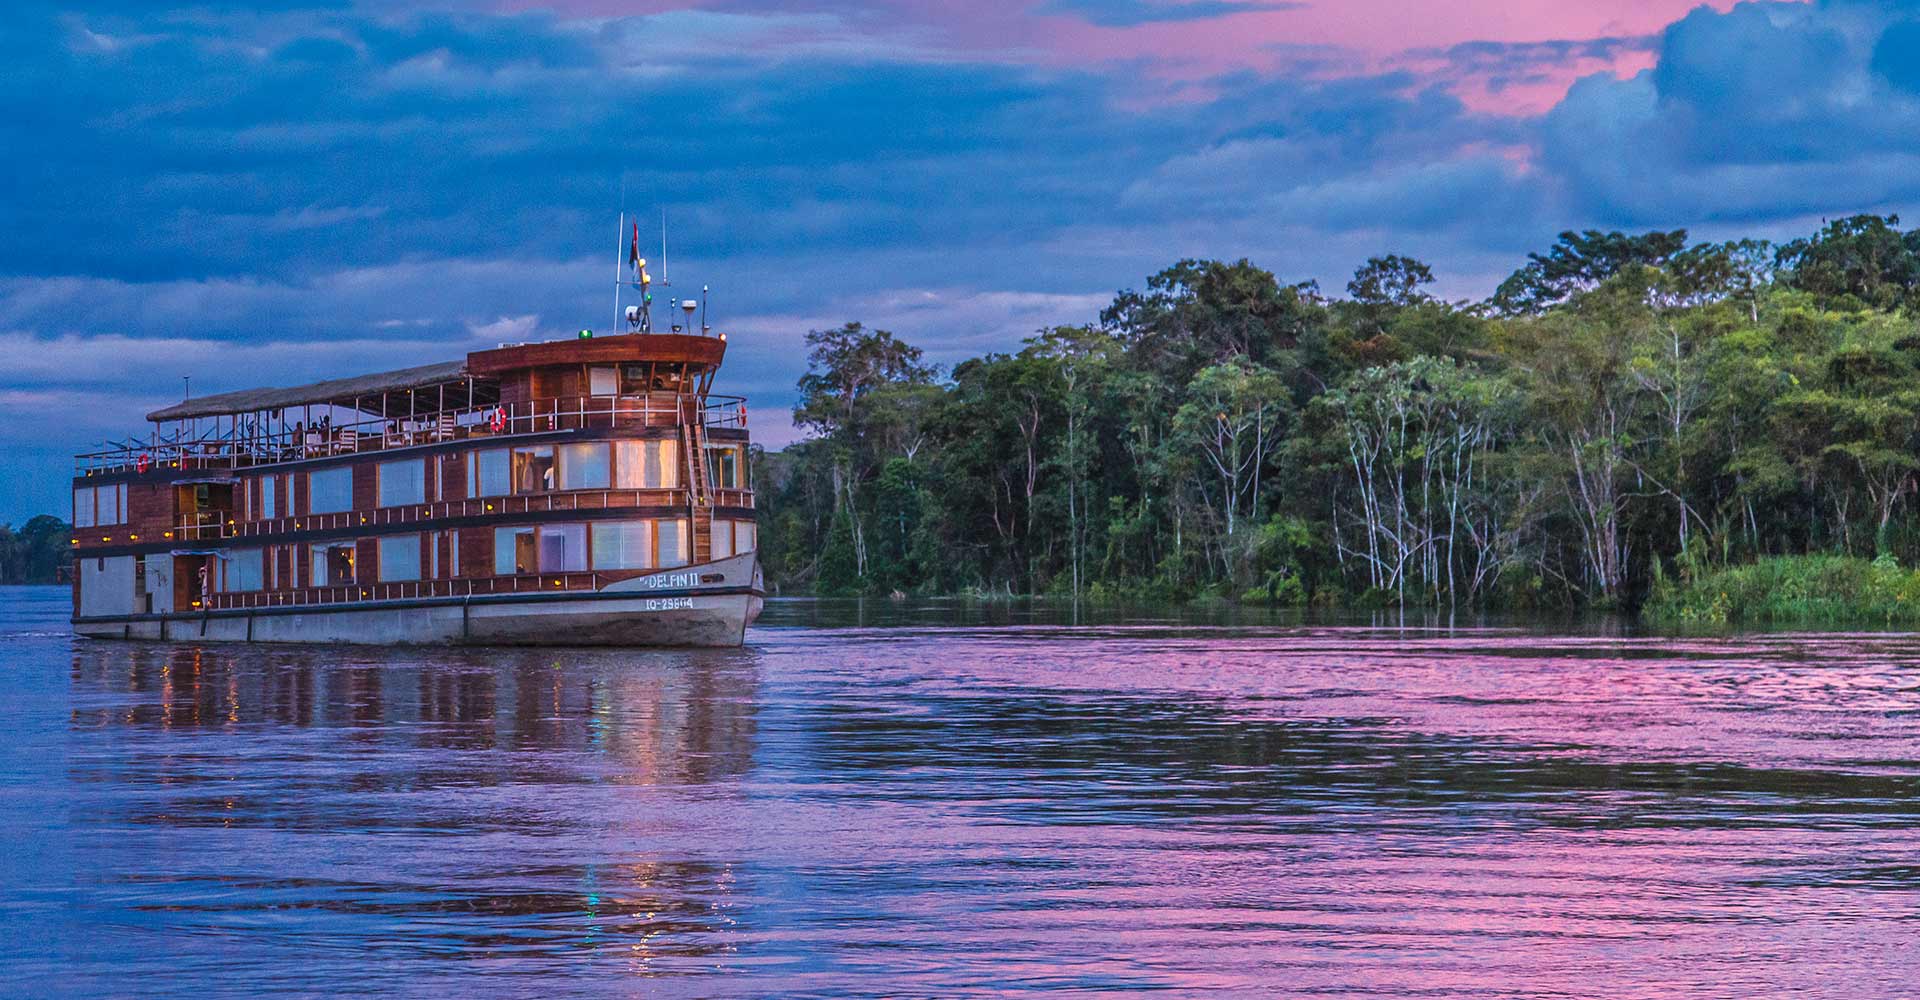 The Delfin II on the Amazon River